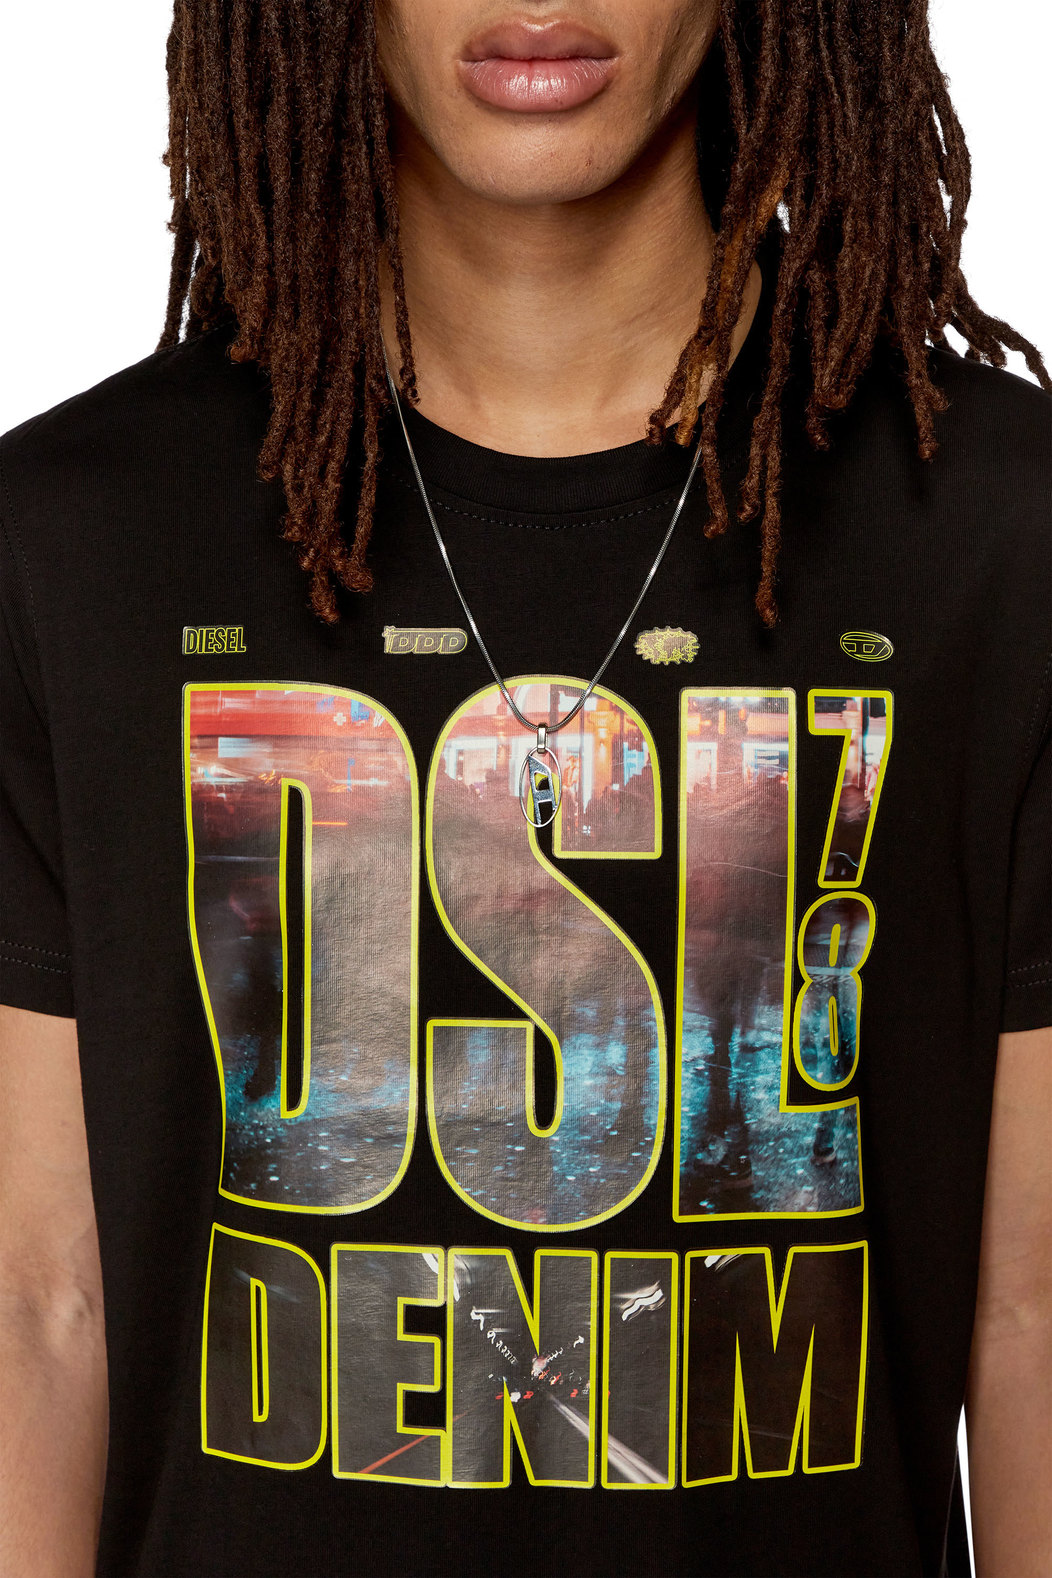 T-shirt with DSL 78 Denim print